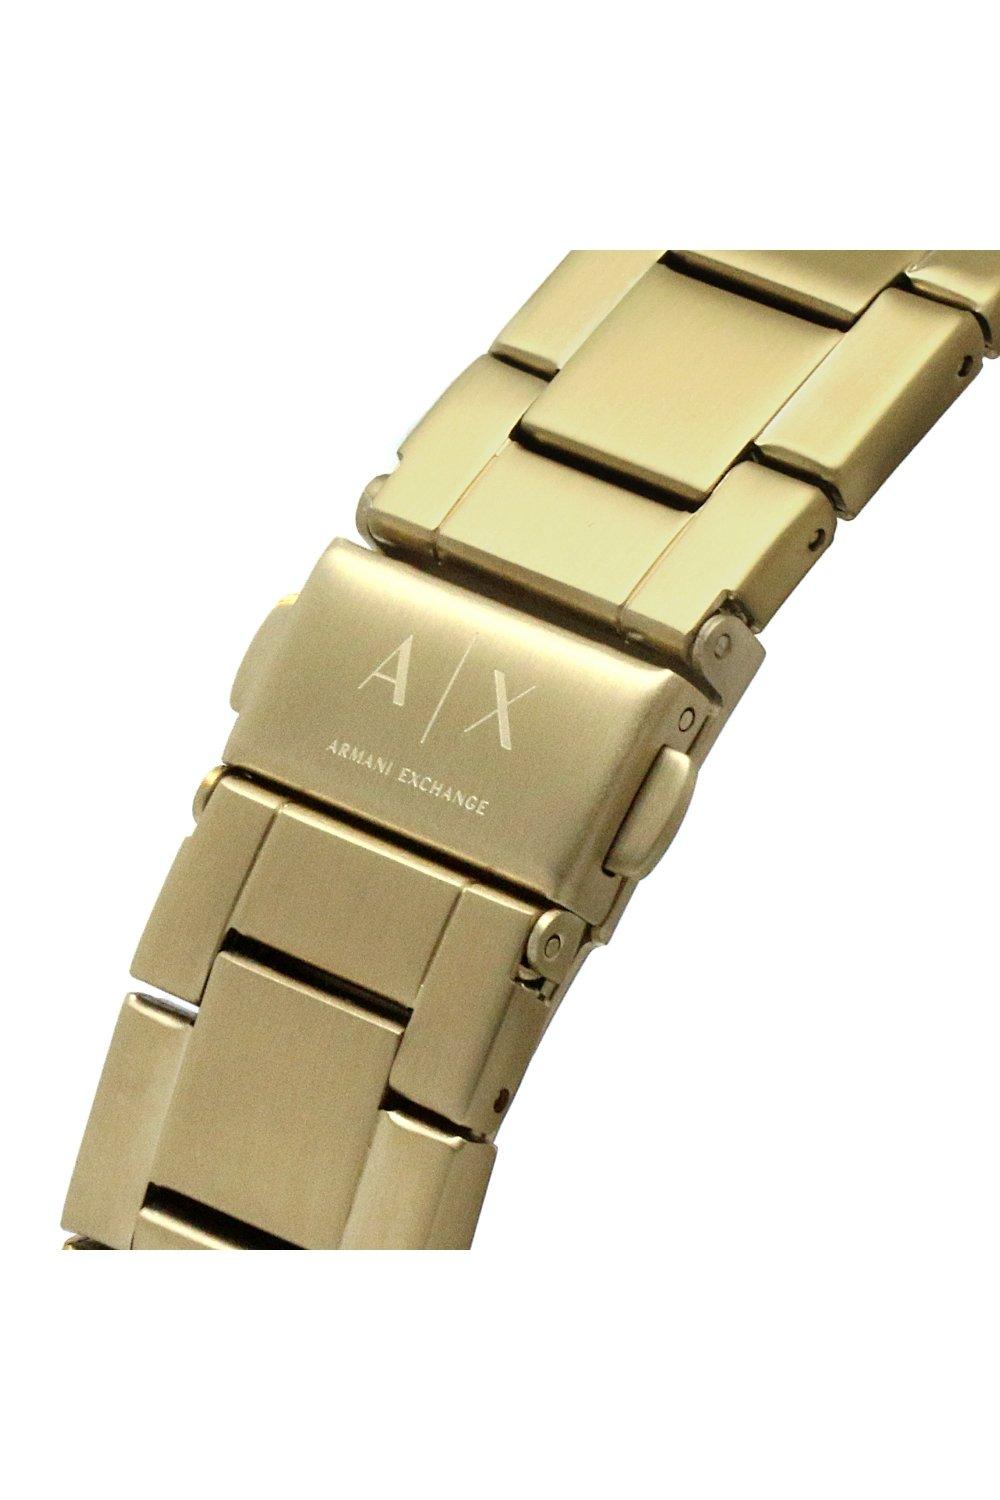 Watches | Stainless Steel Fashion Analogue Quartz Watch - Ax1854 | Armani  Exchange